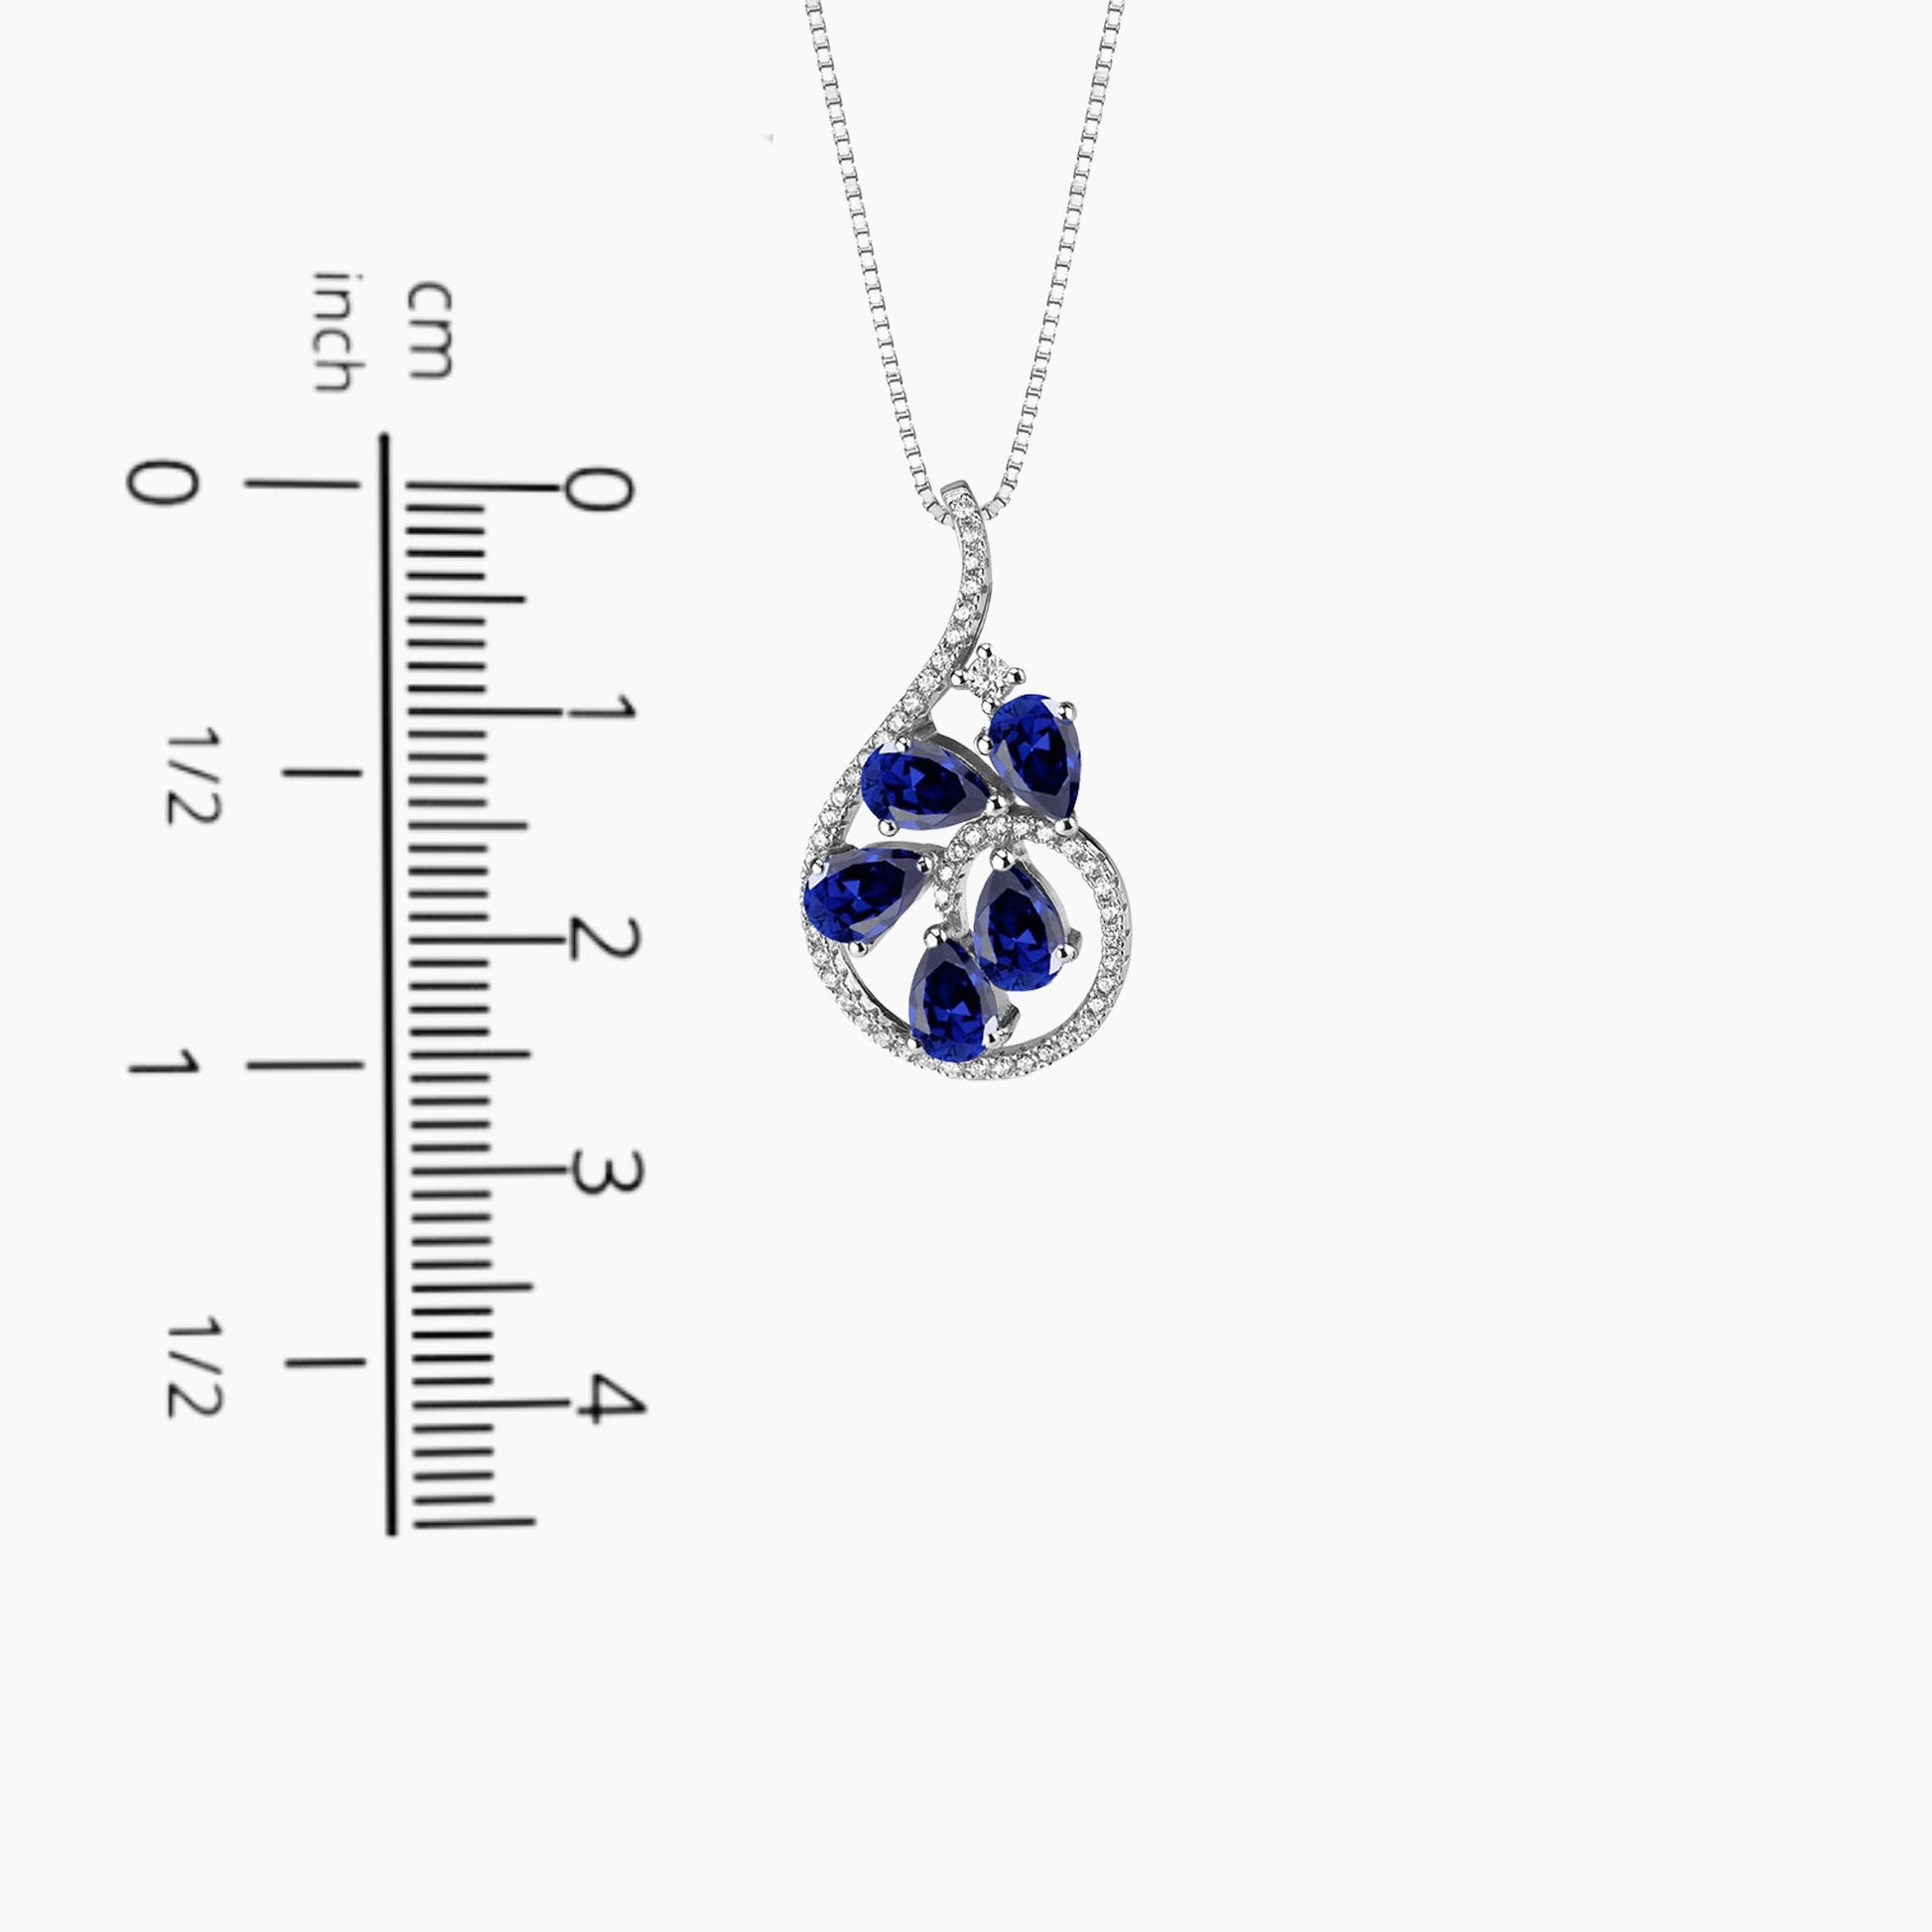  Authentic dewdrop-shaped sapphire gemstones.